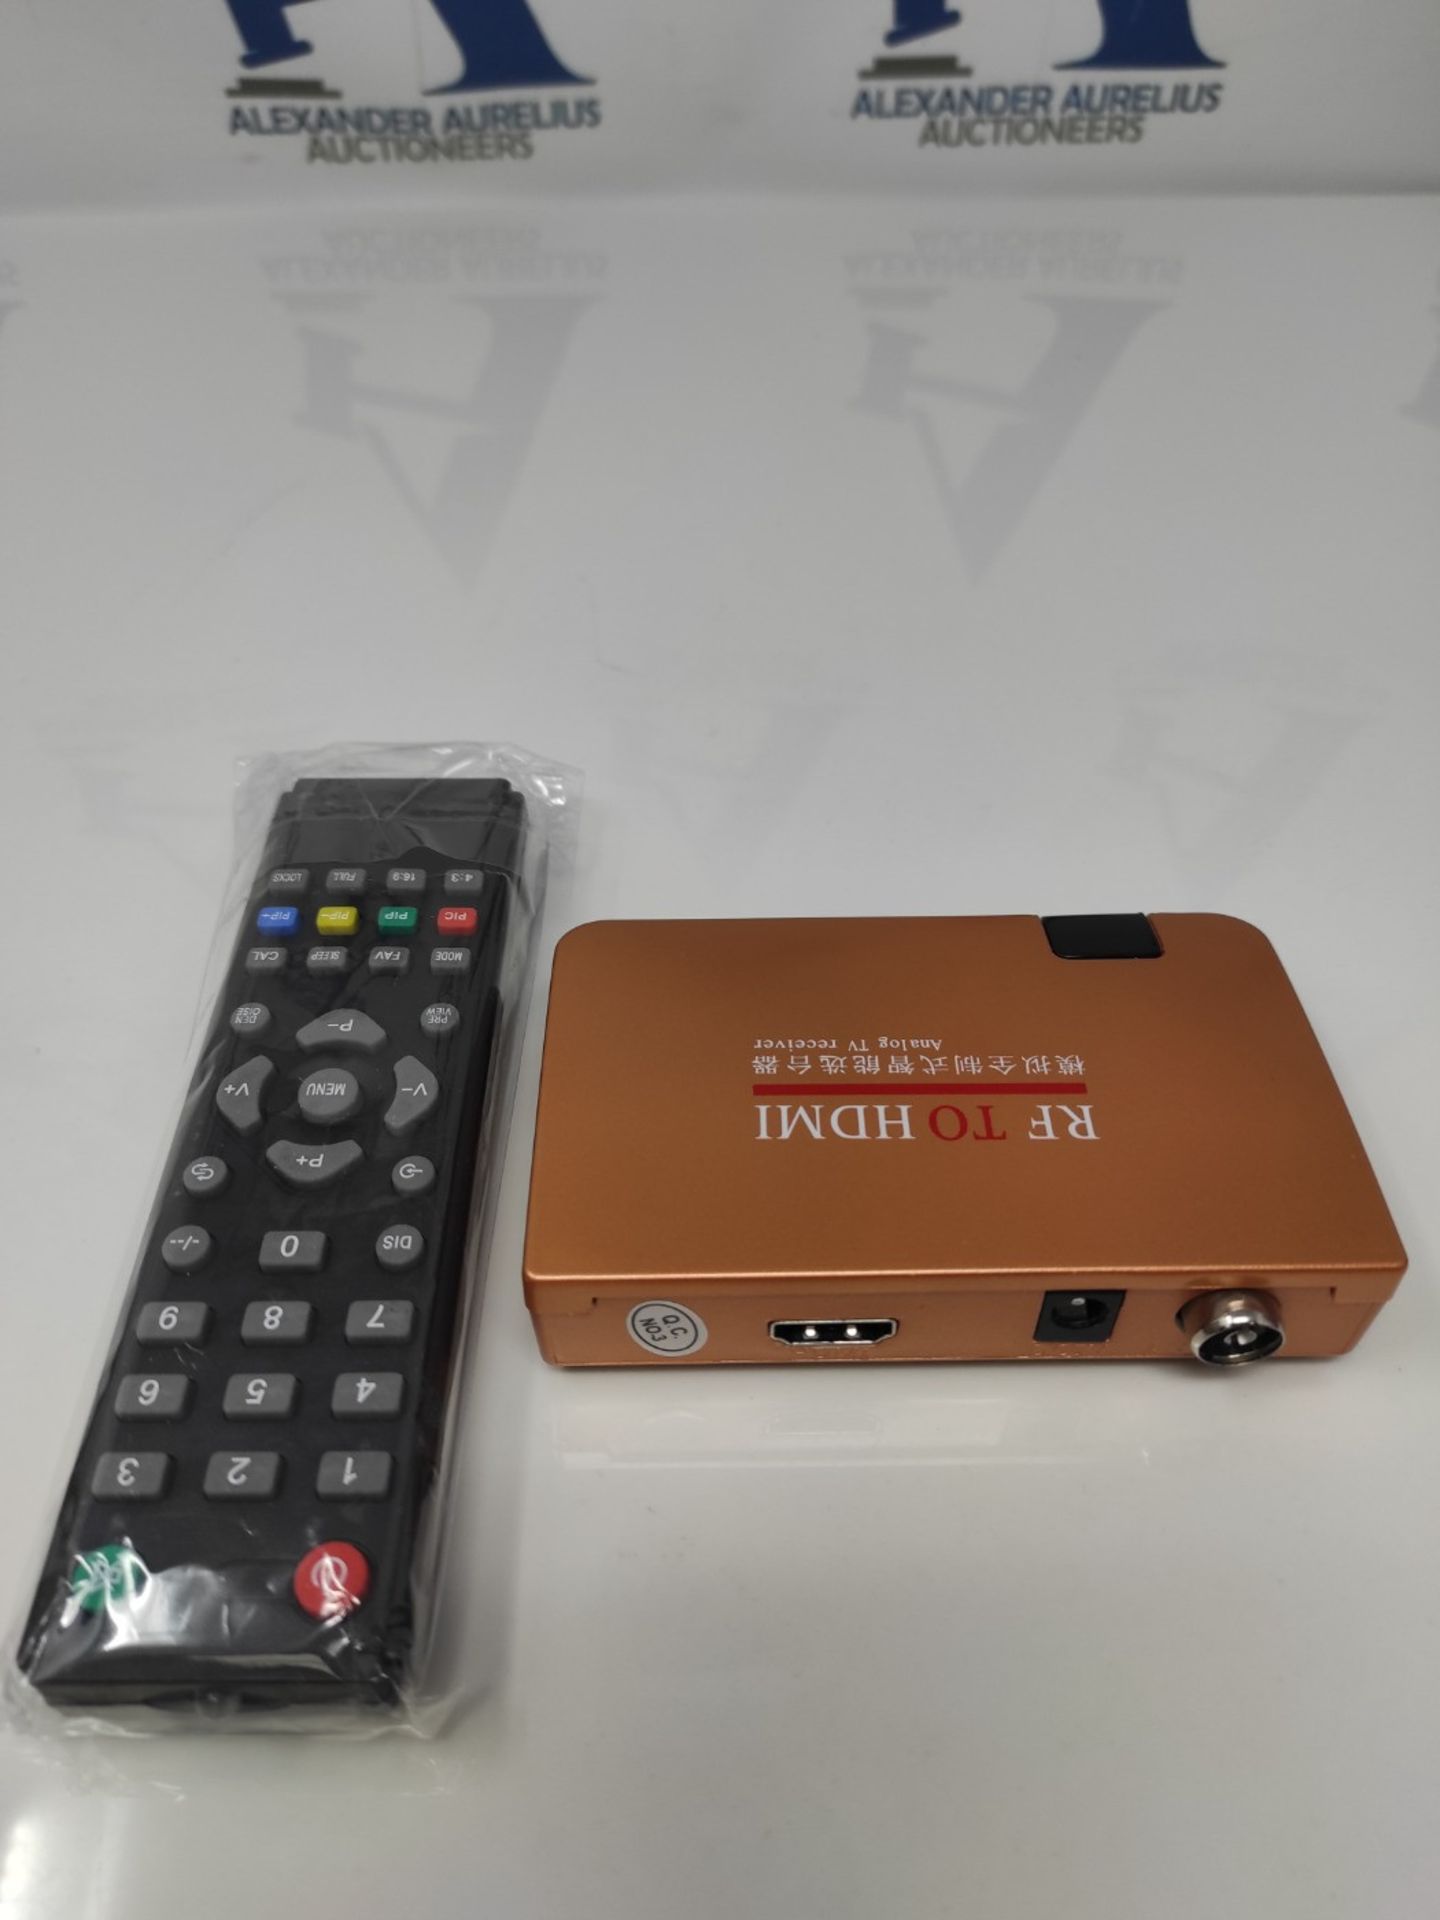 VBESTLIFE Analog TV Adapter for Analog TV Receiver with RF HDMI Converter (VDE) for al